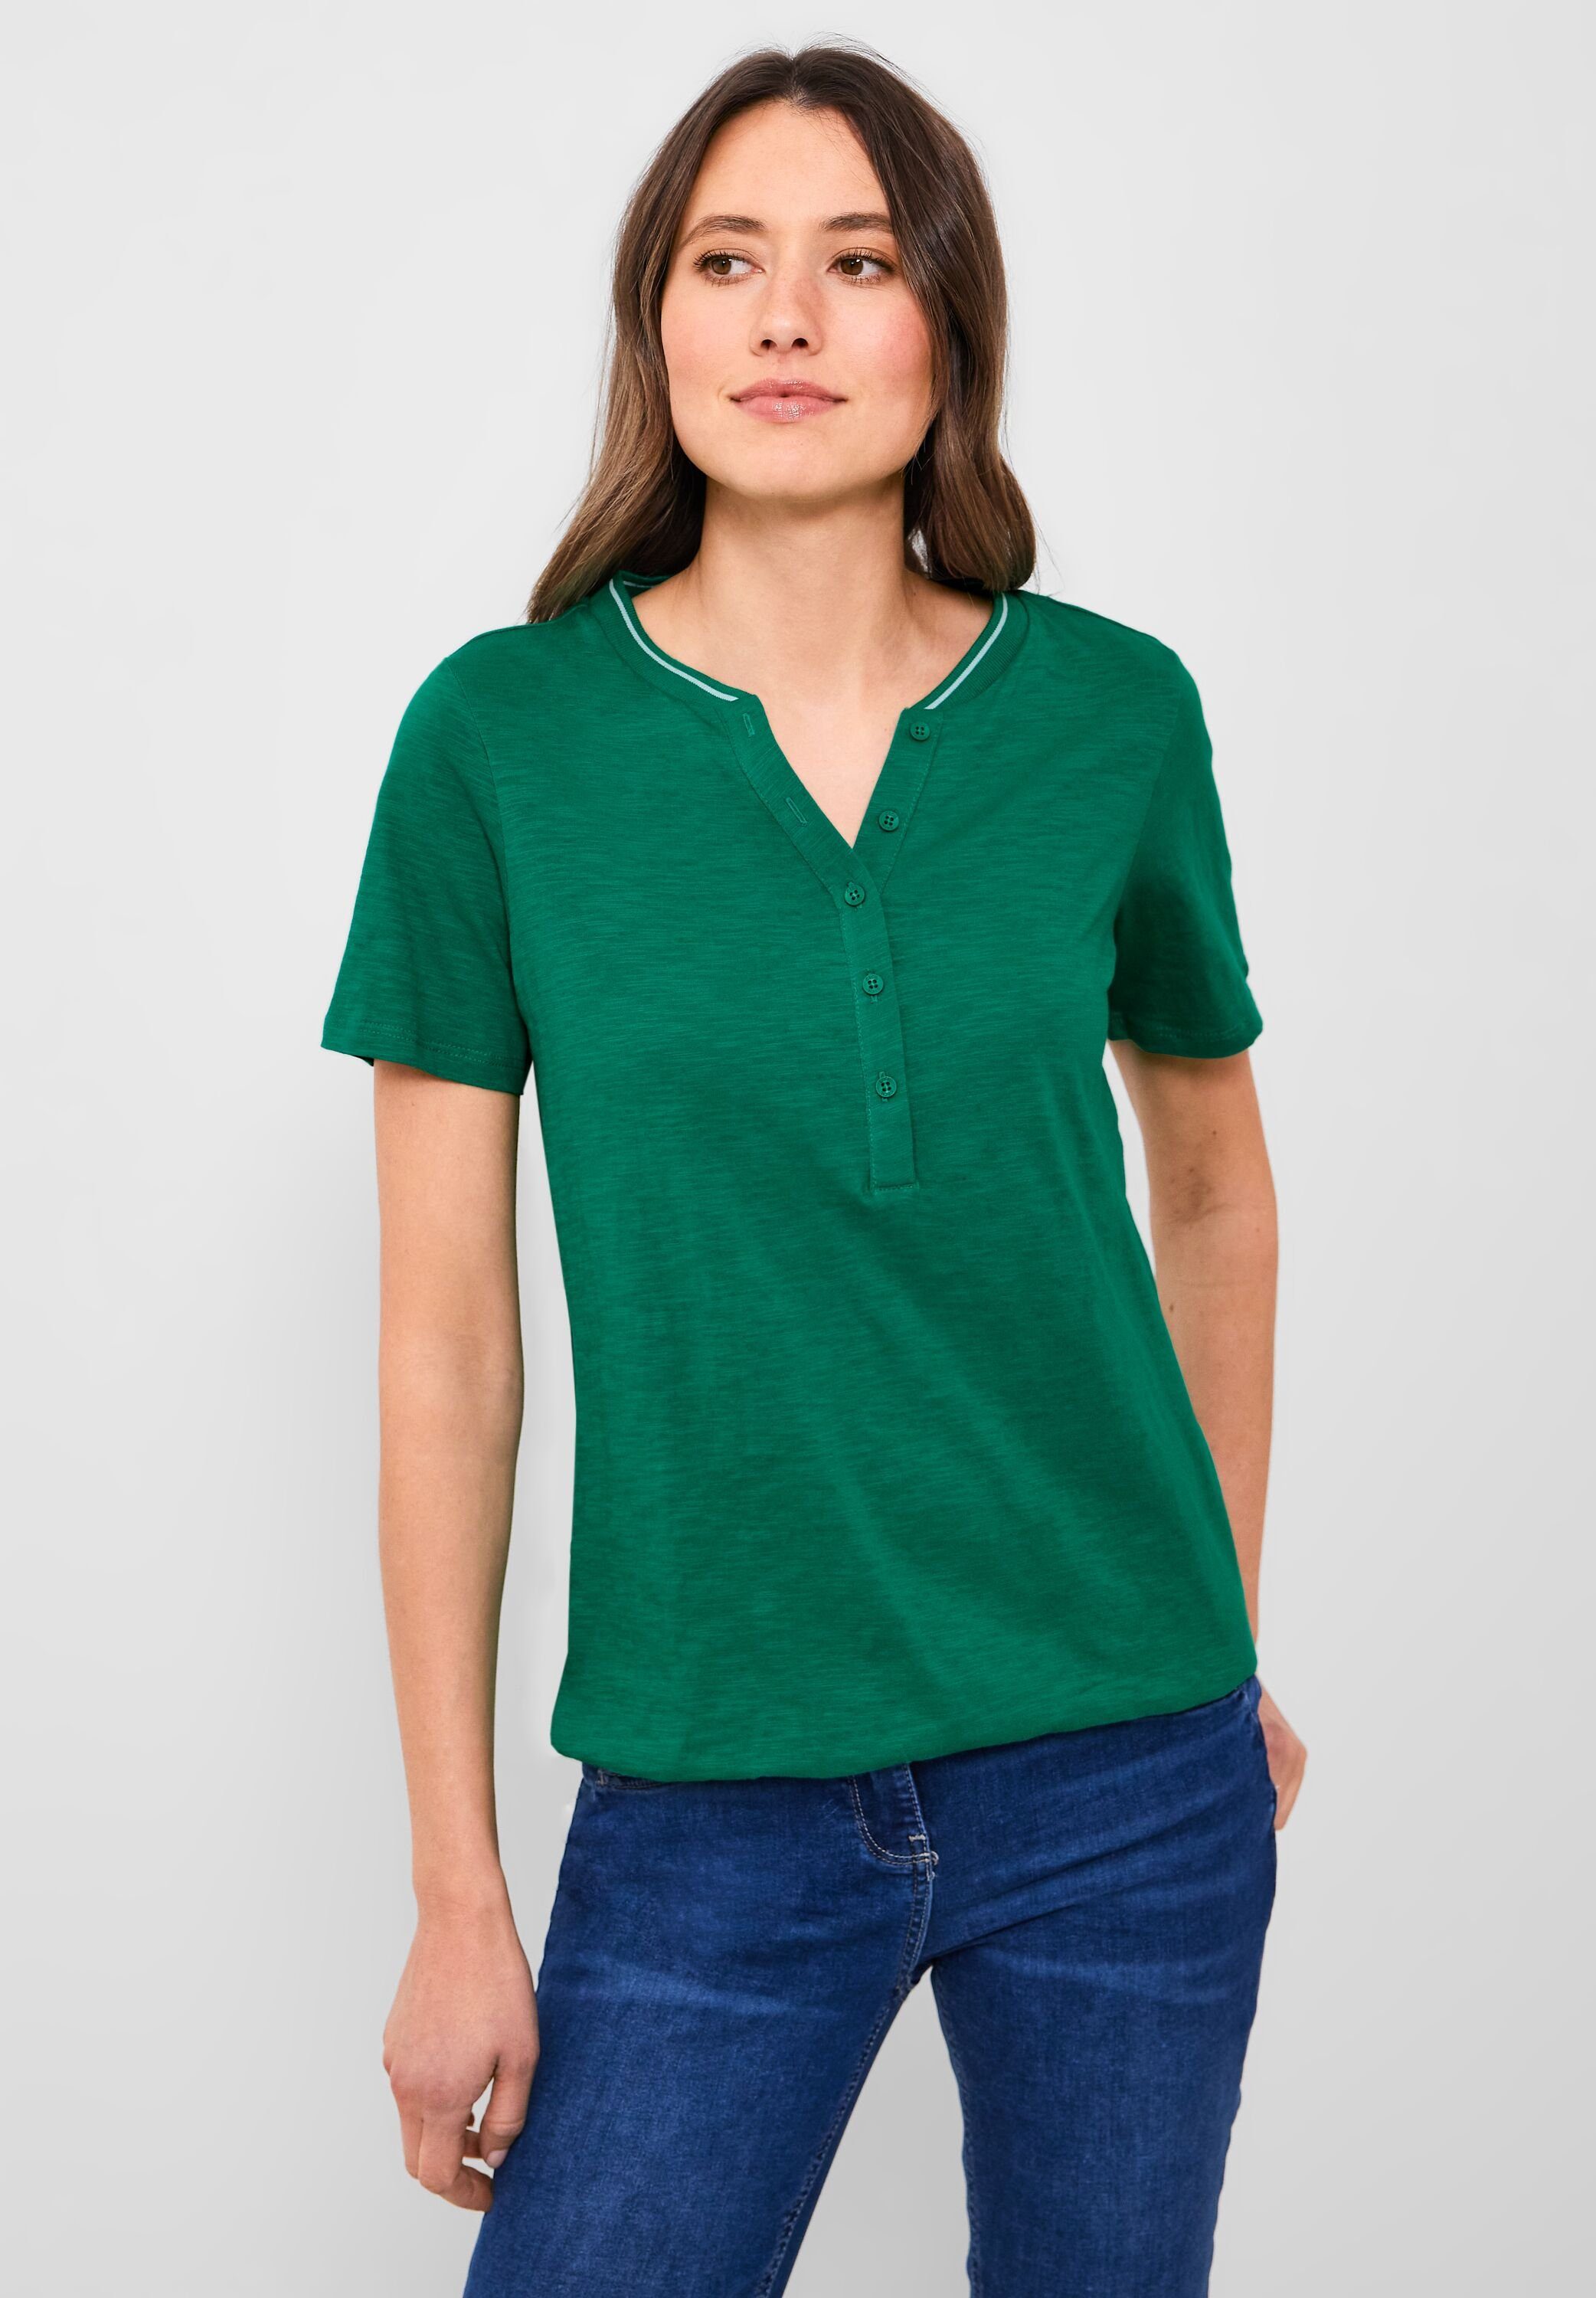 Preis für den Durchschnittsbürger Cecil luscious in 3/4-Arm-Shirt Unifarbe green